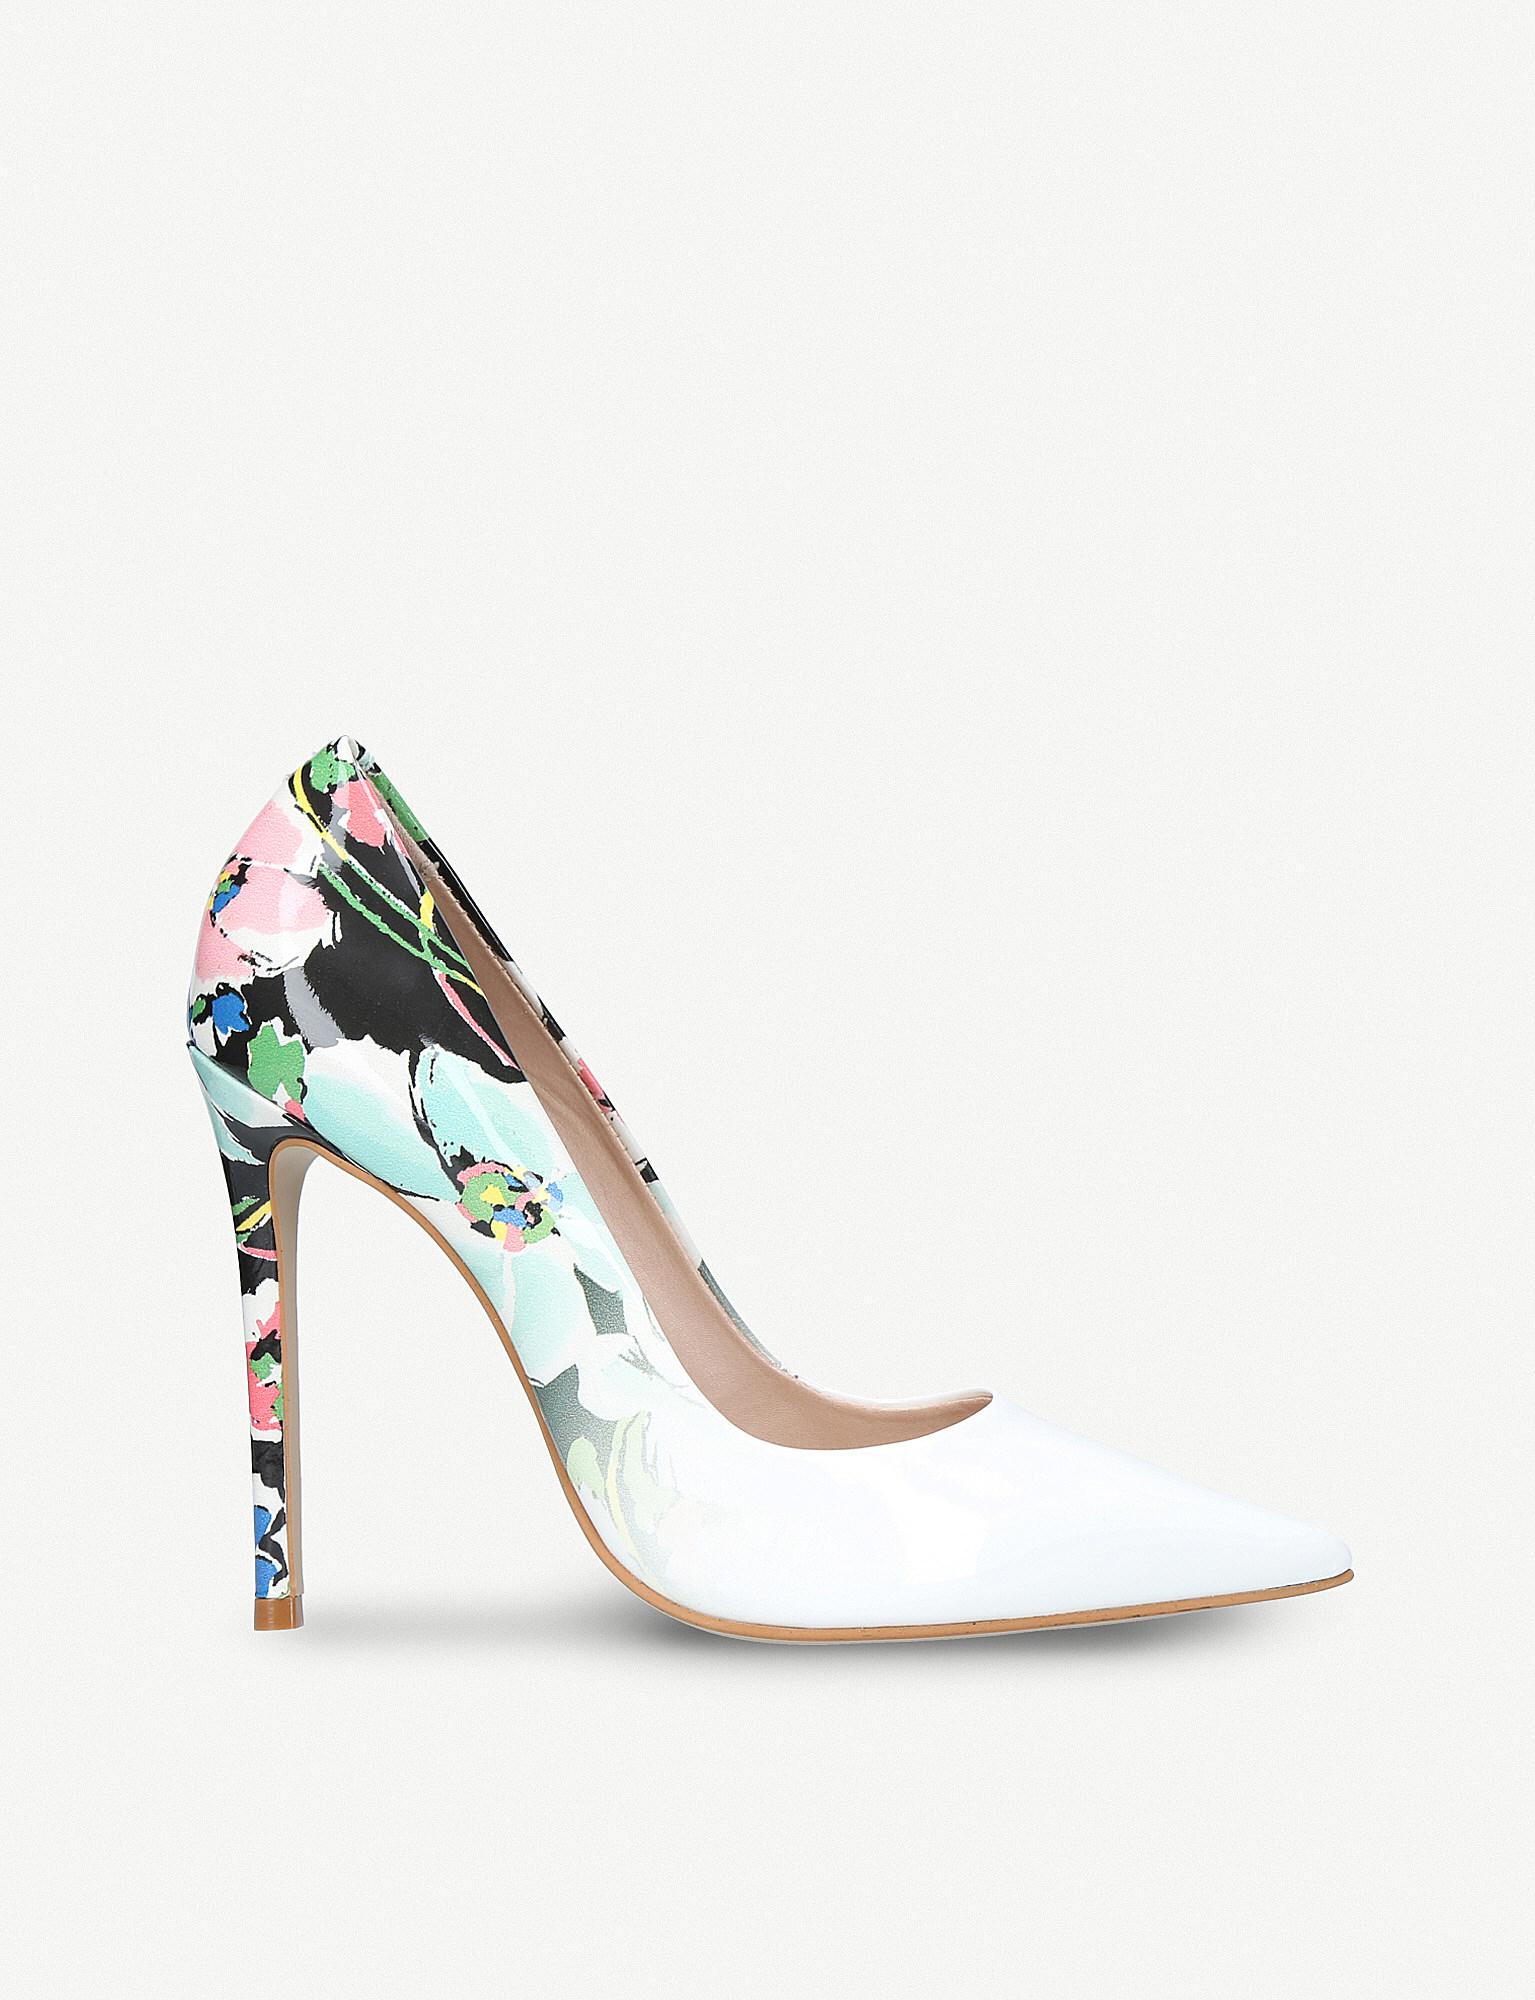 carvela alice heels